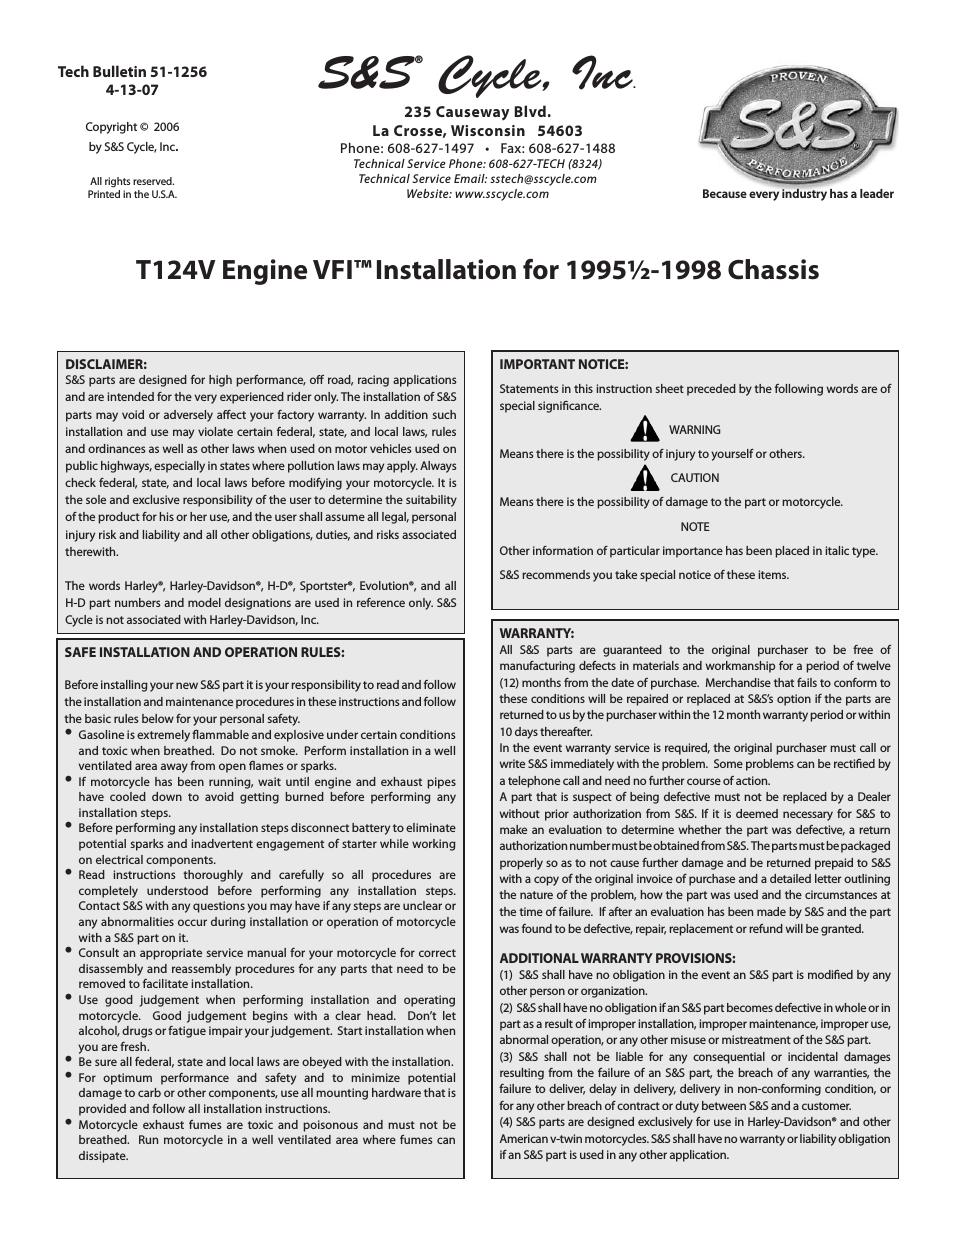 T124V Engine VFI for 1995 1/2-1998 Chassis